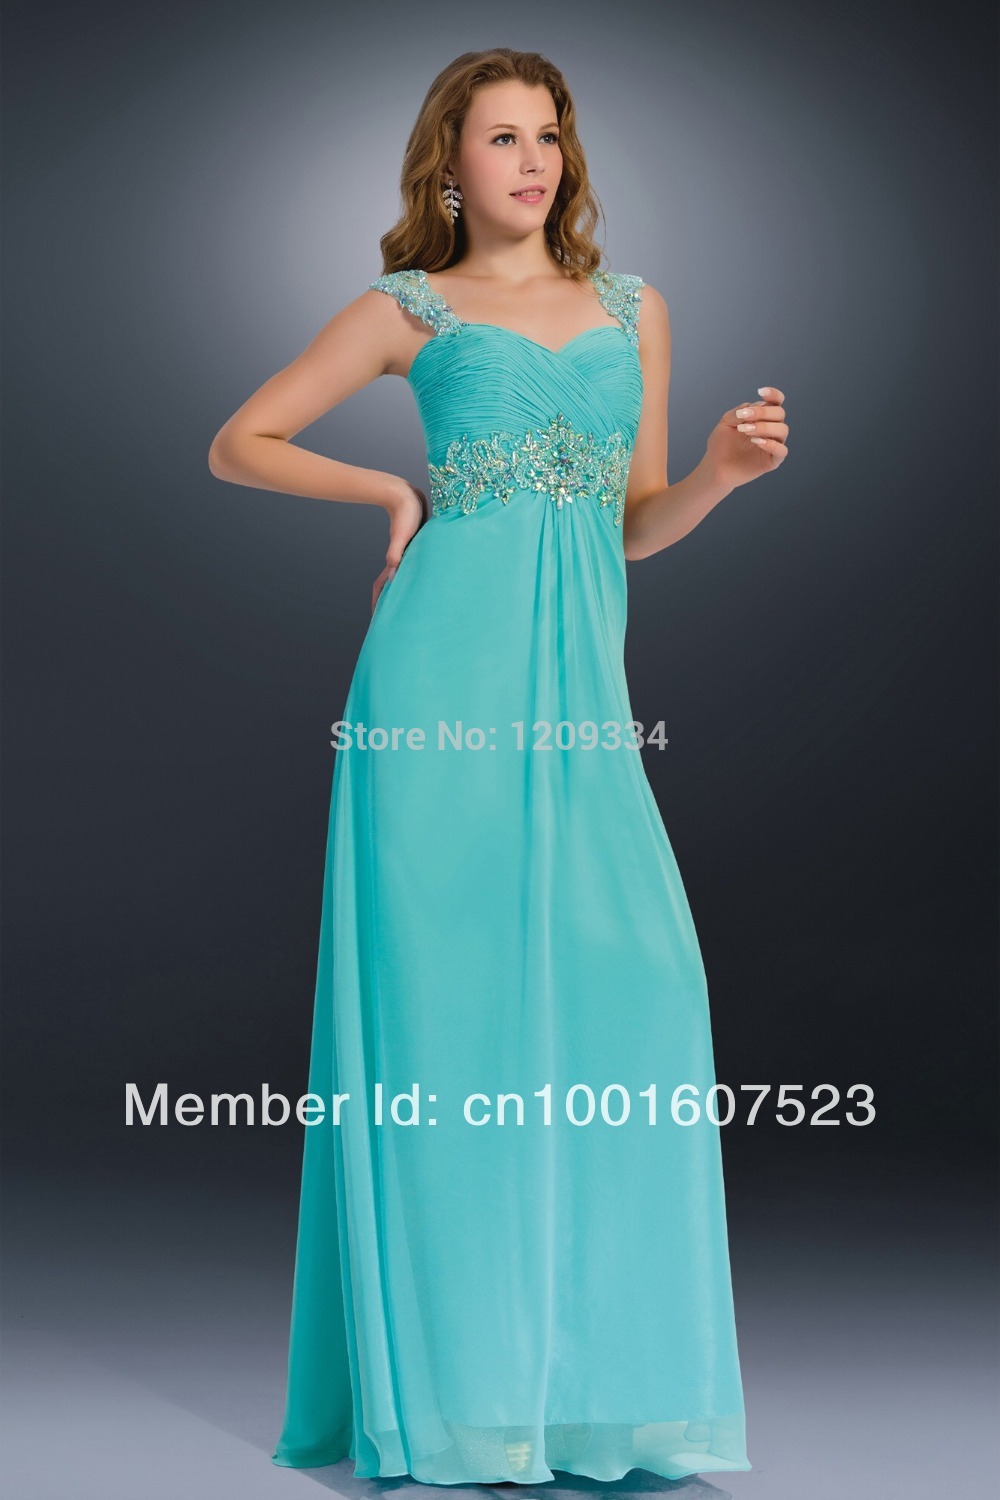 Formal Dresses Charlotte Nc